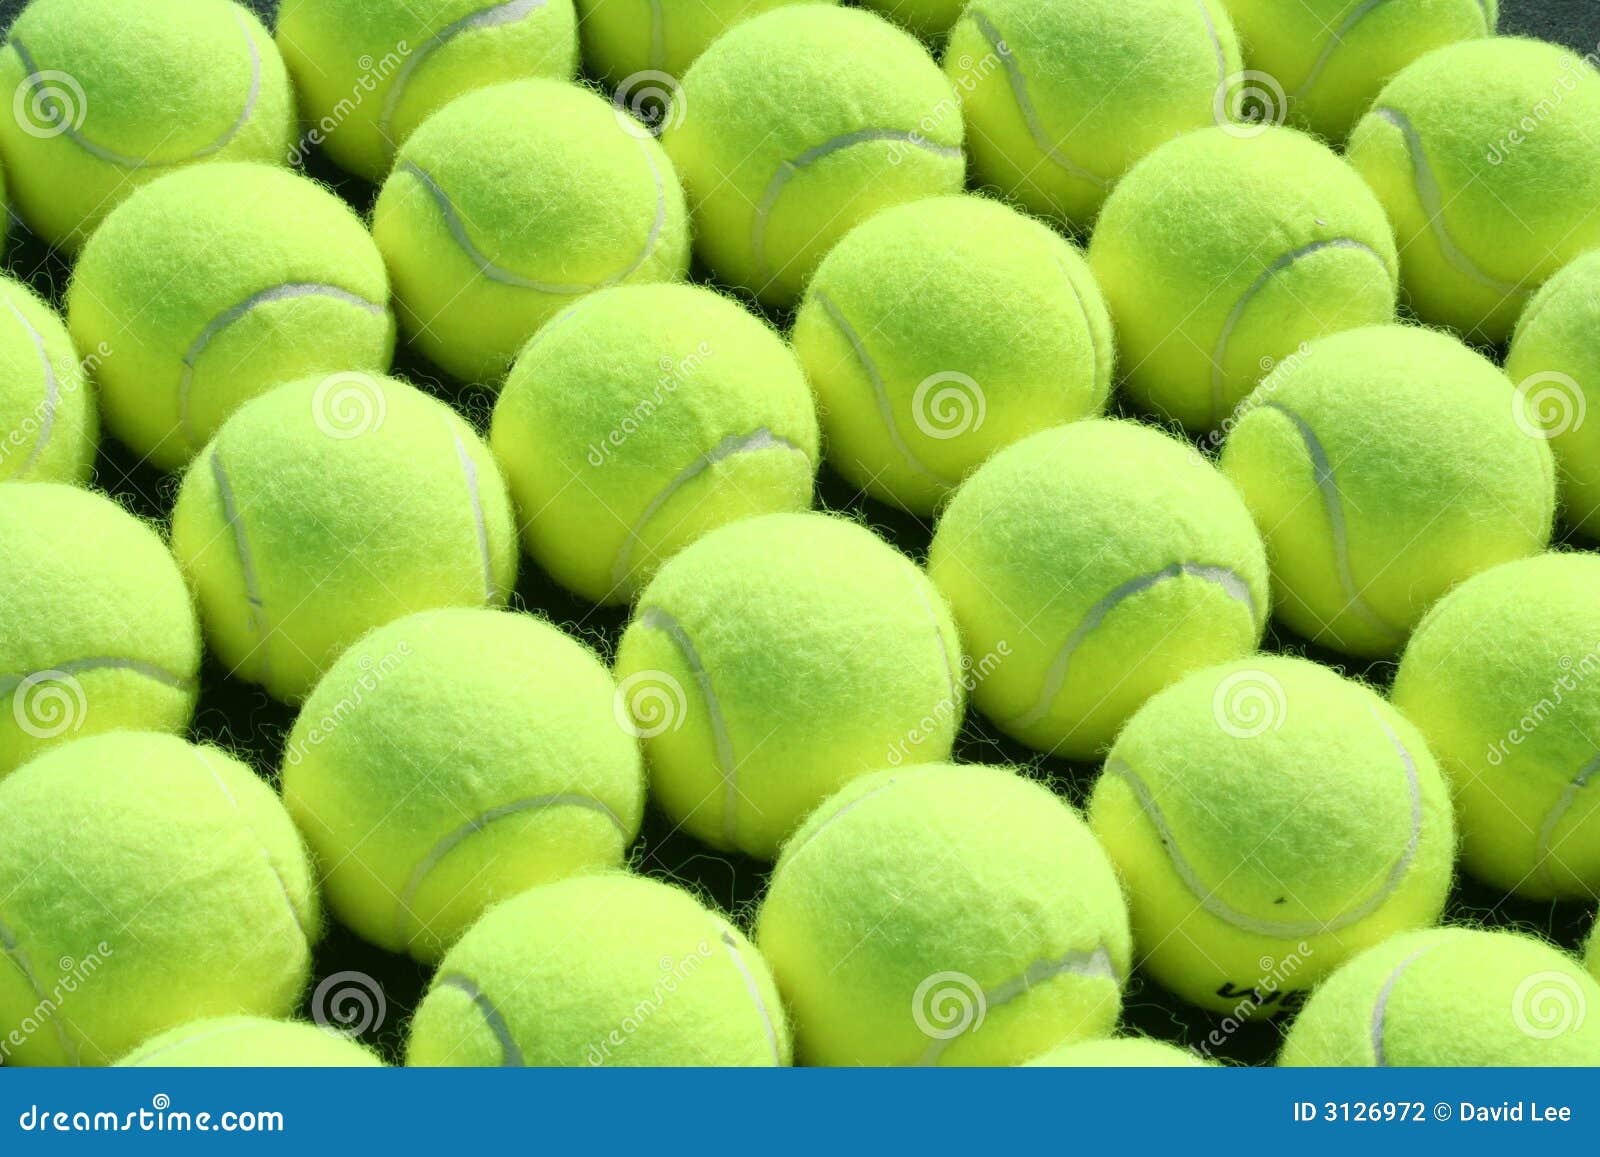 Rows of tennis balls stock photo. Image of rows, balls - 3126972